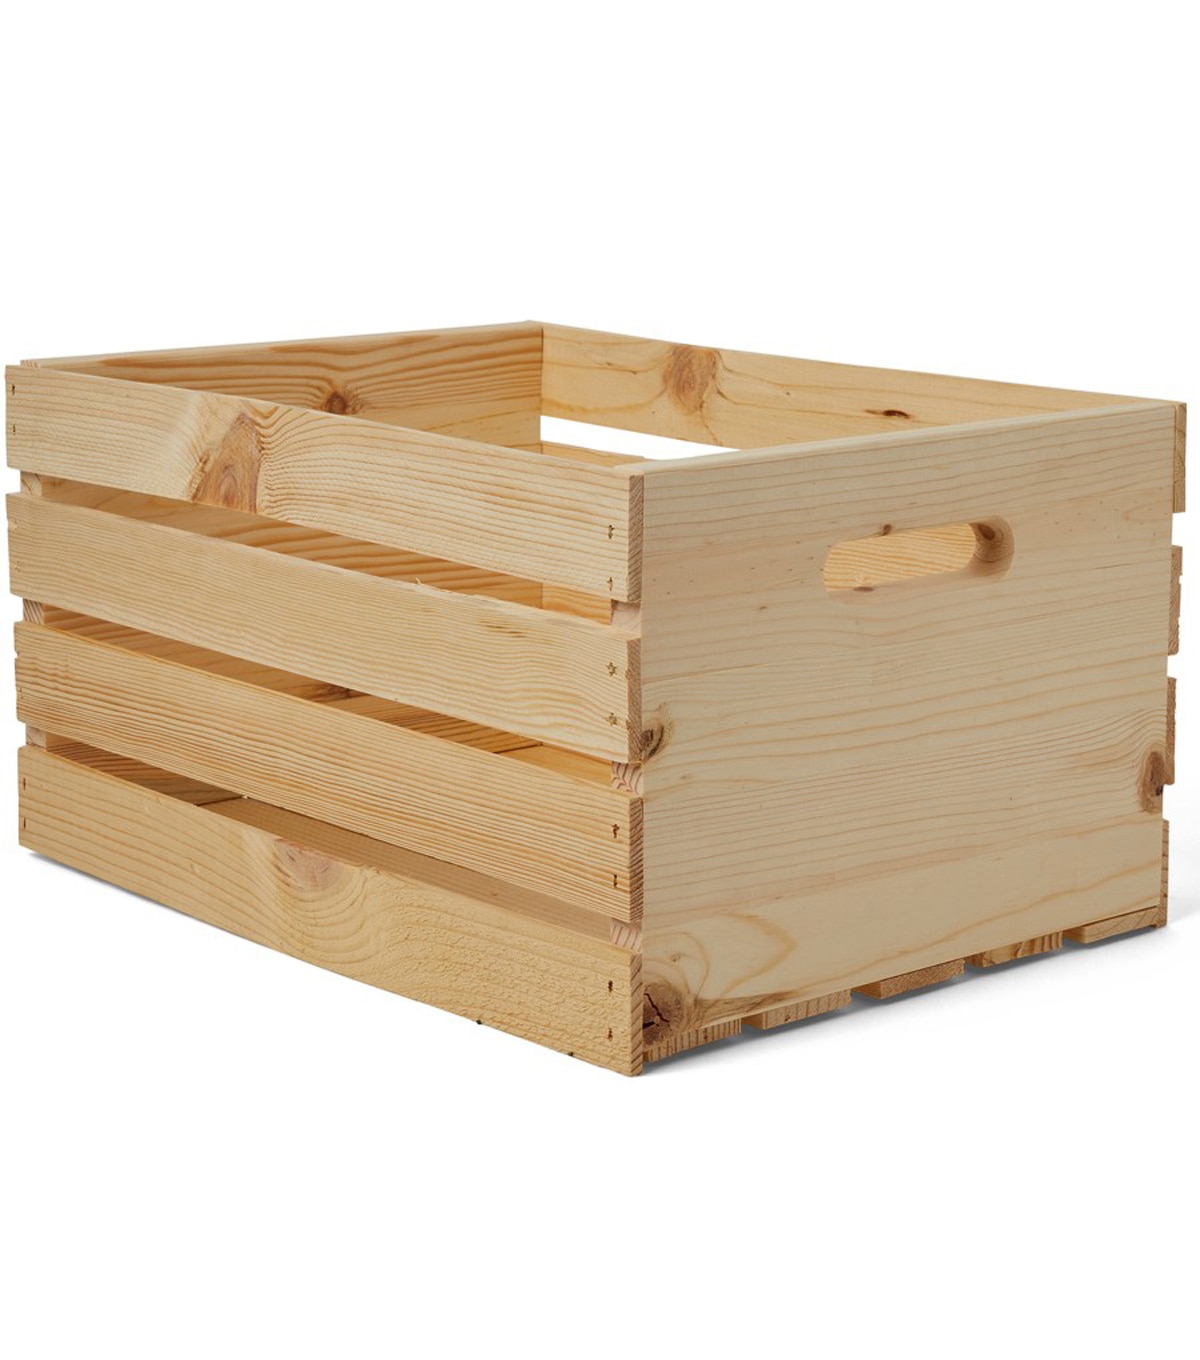 apple crates used